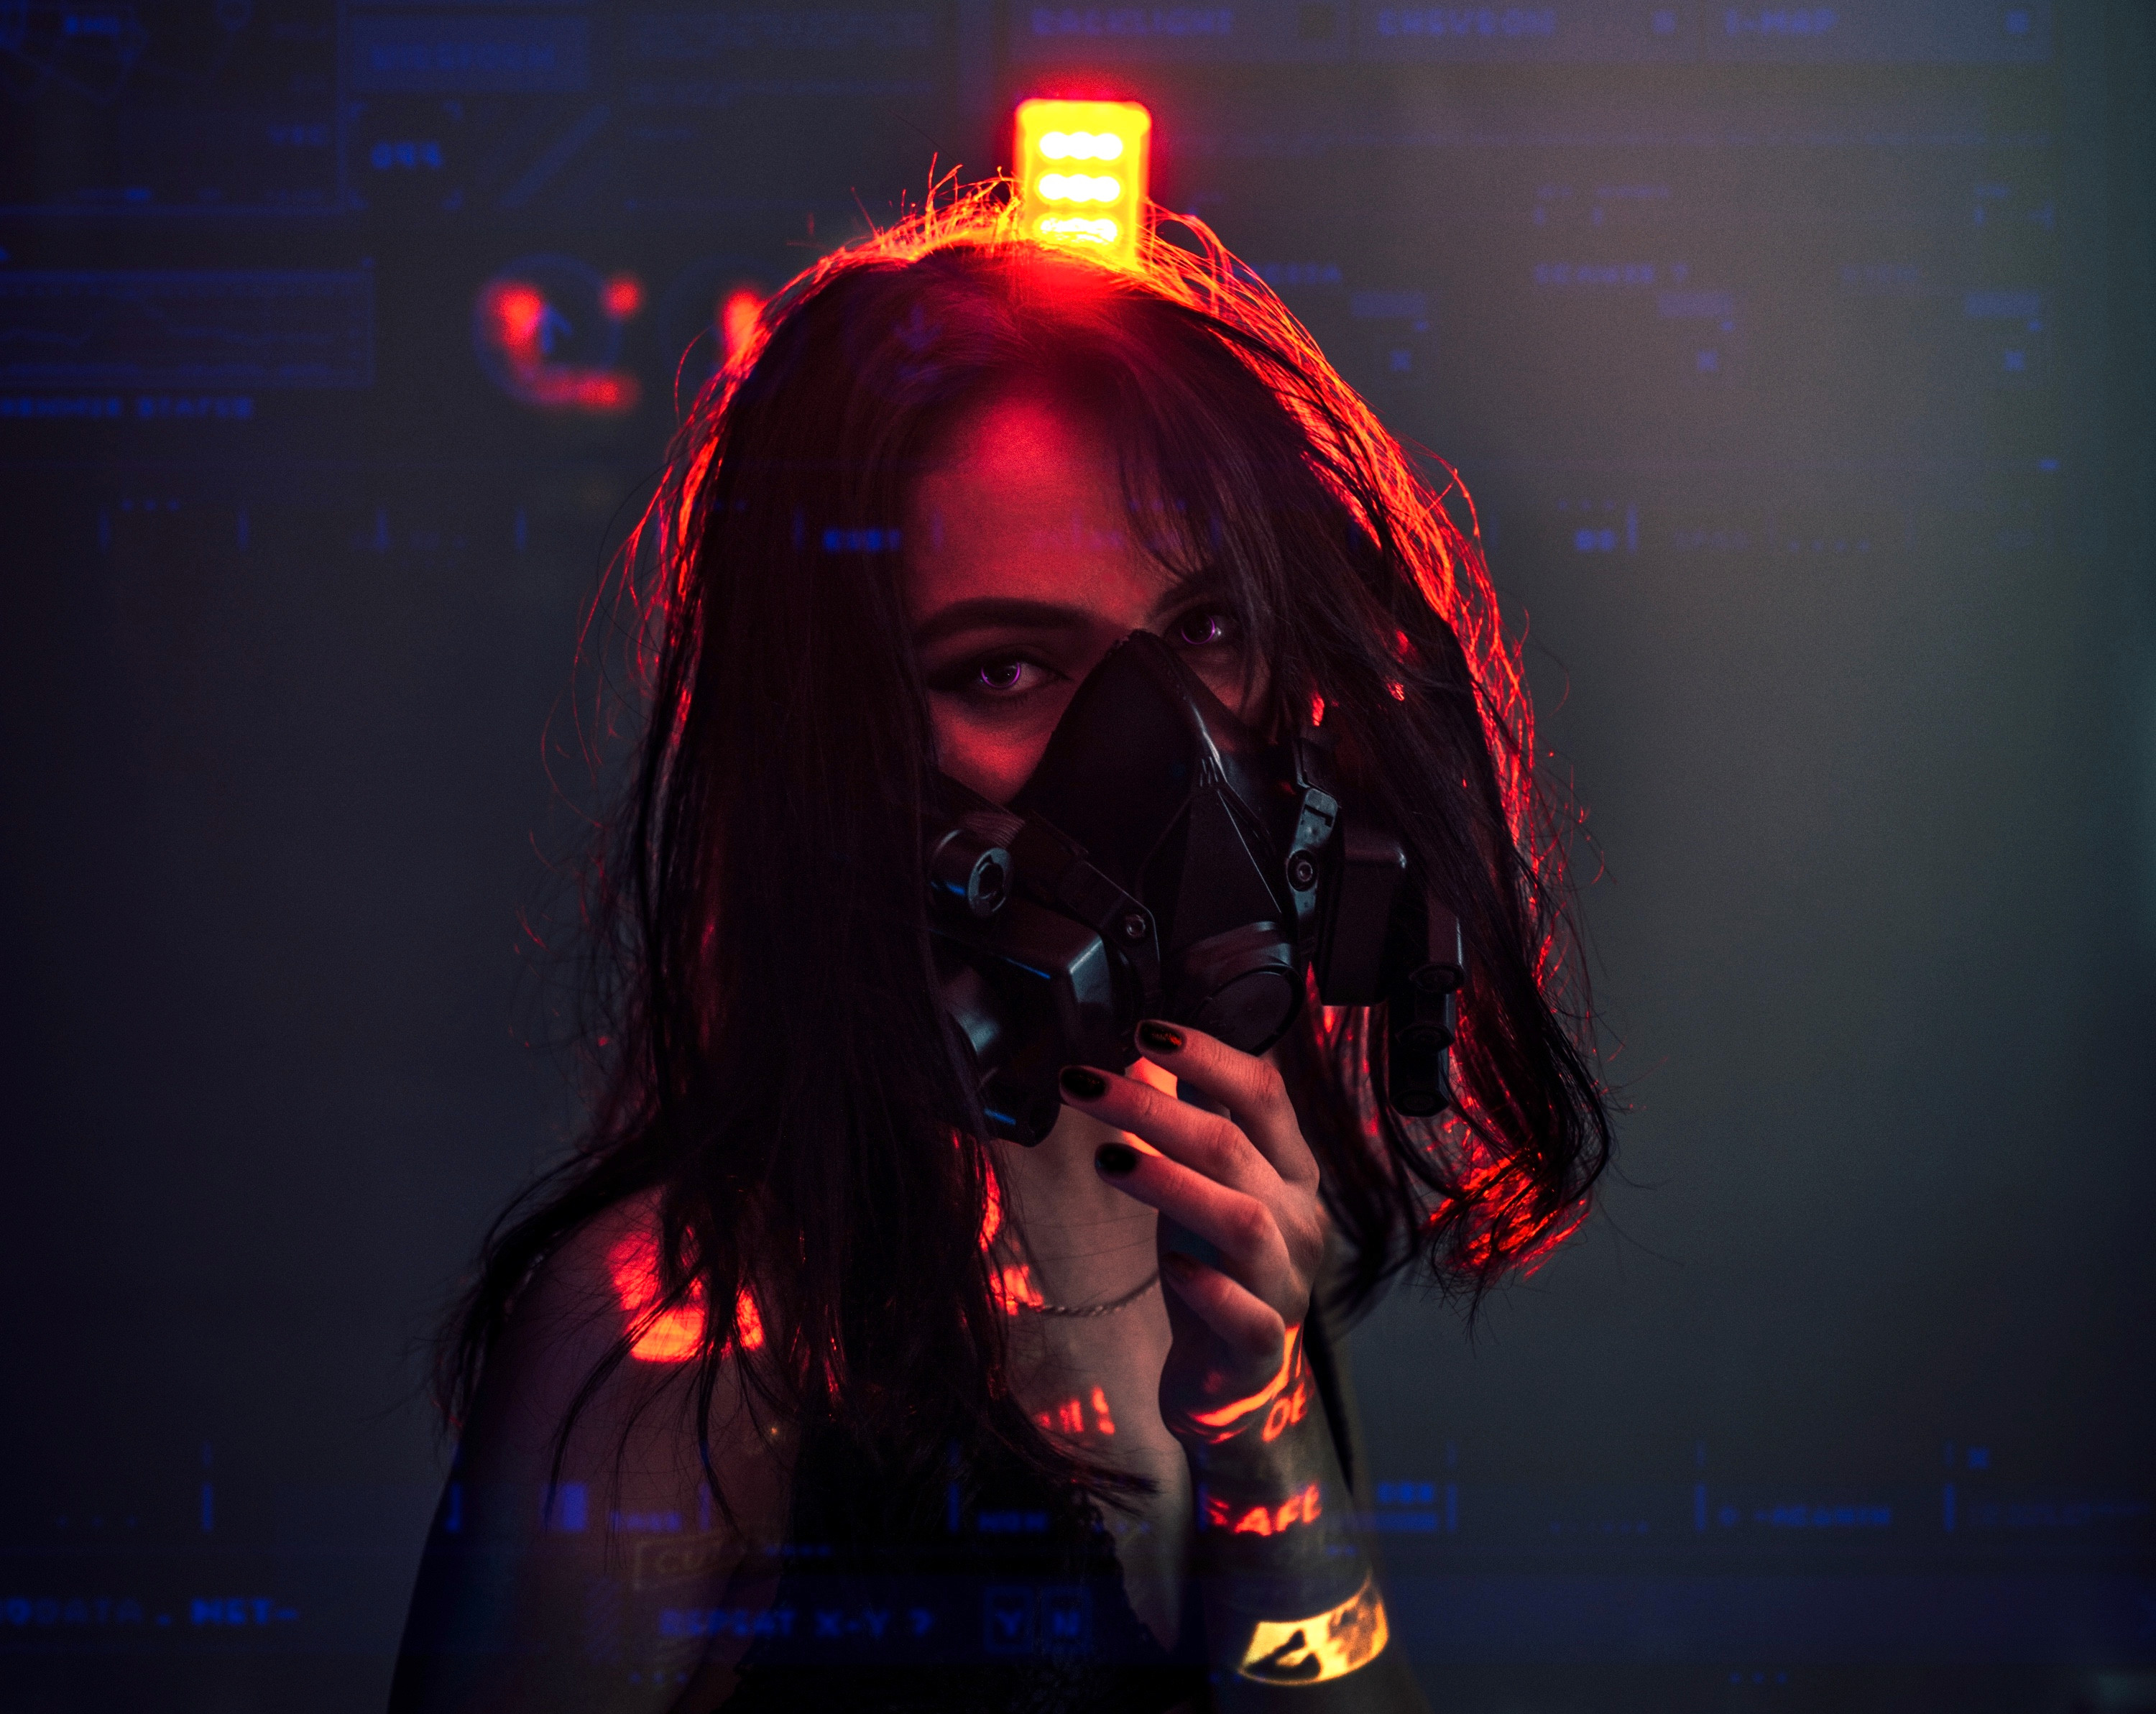 Vadim Sadovski Cyborg Mask Looking Away Red Light Women Dark Hair Digital Art Fan Art Cyberpunk Artw 3000x2385